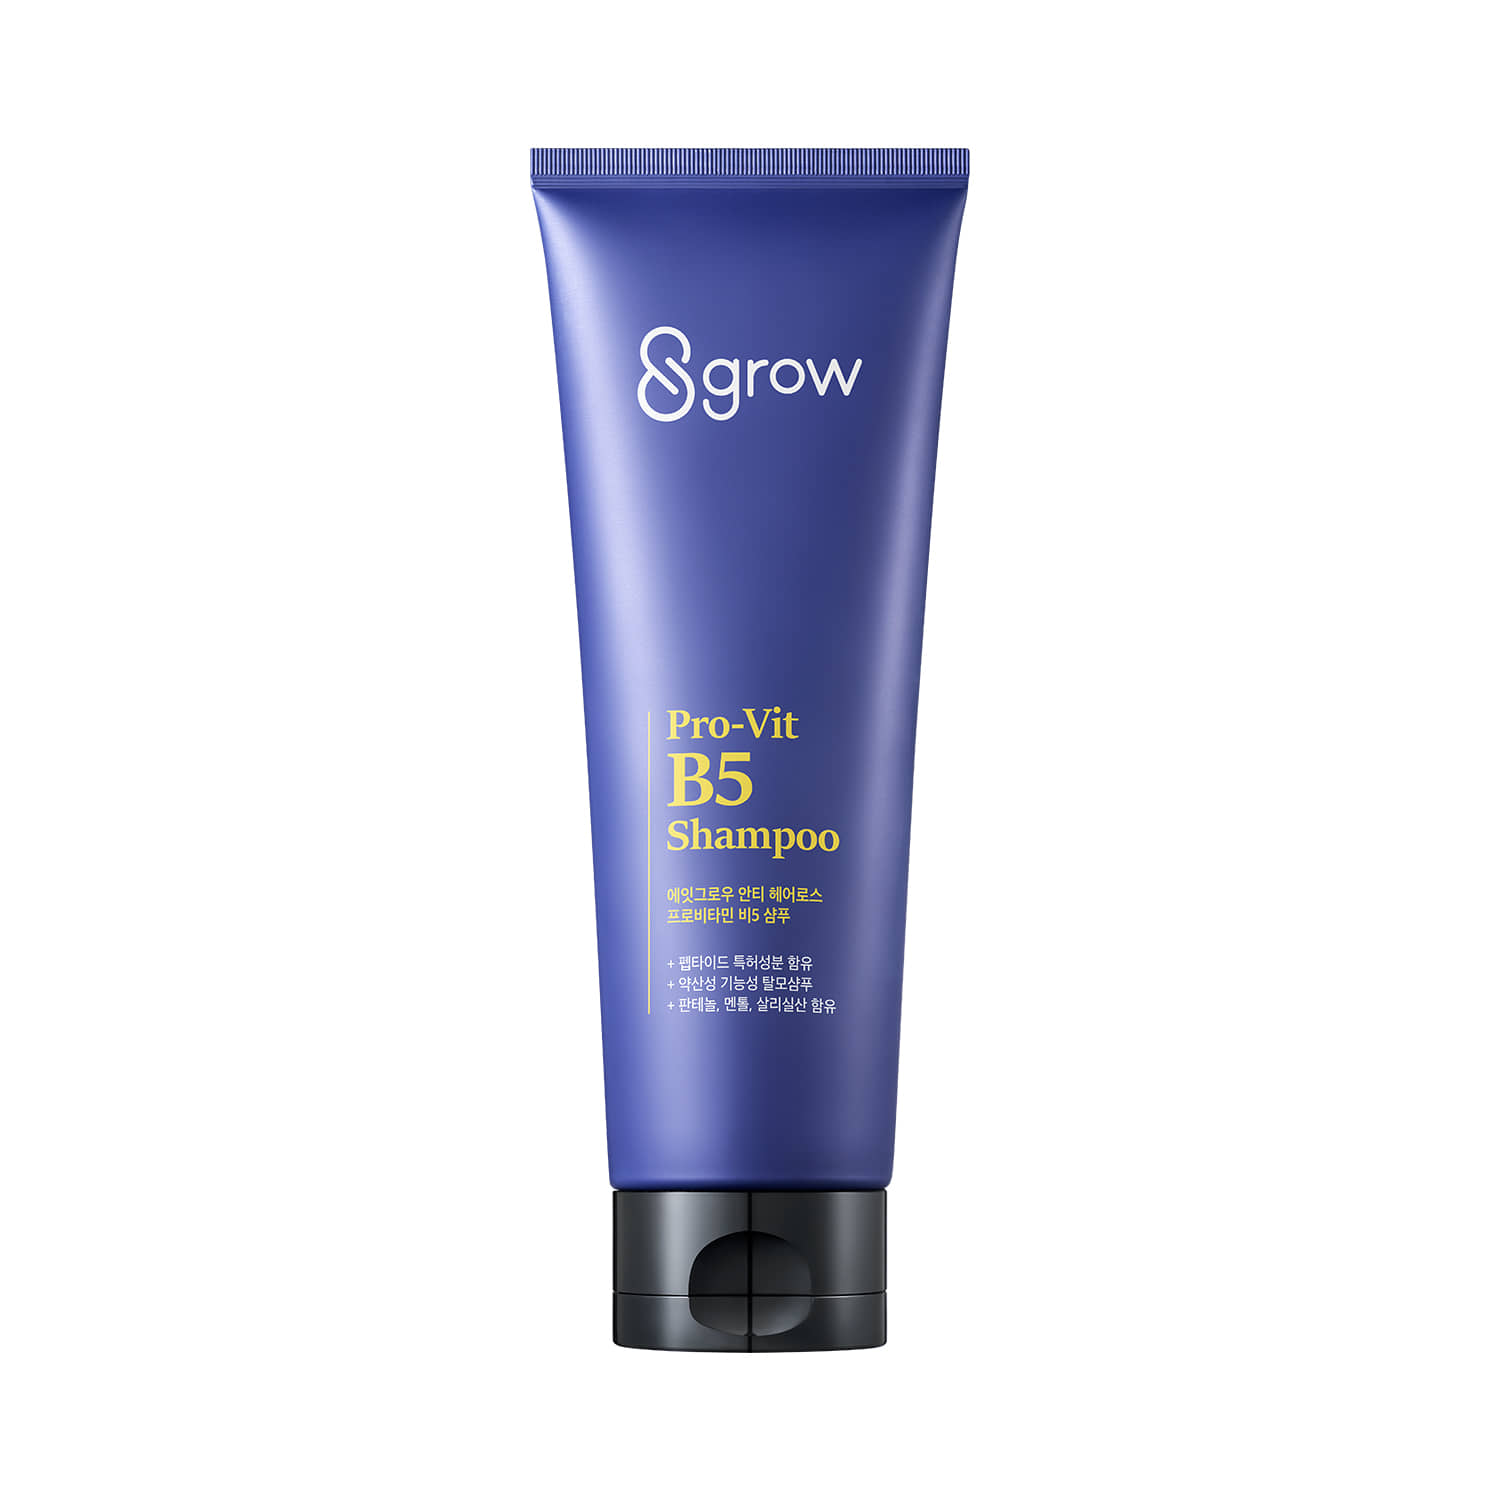 8grow Anti hairloss Pro-vit B5 Shampoo